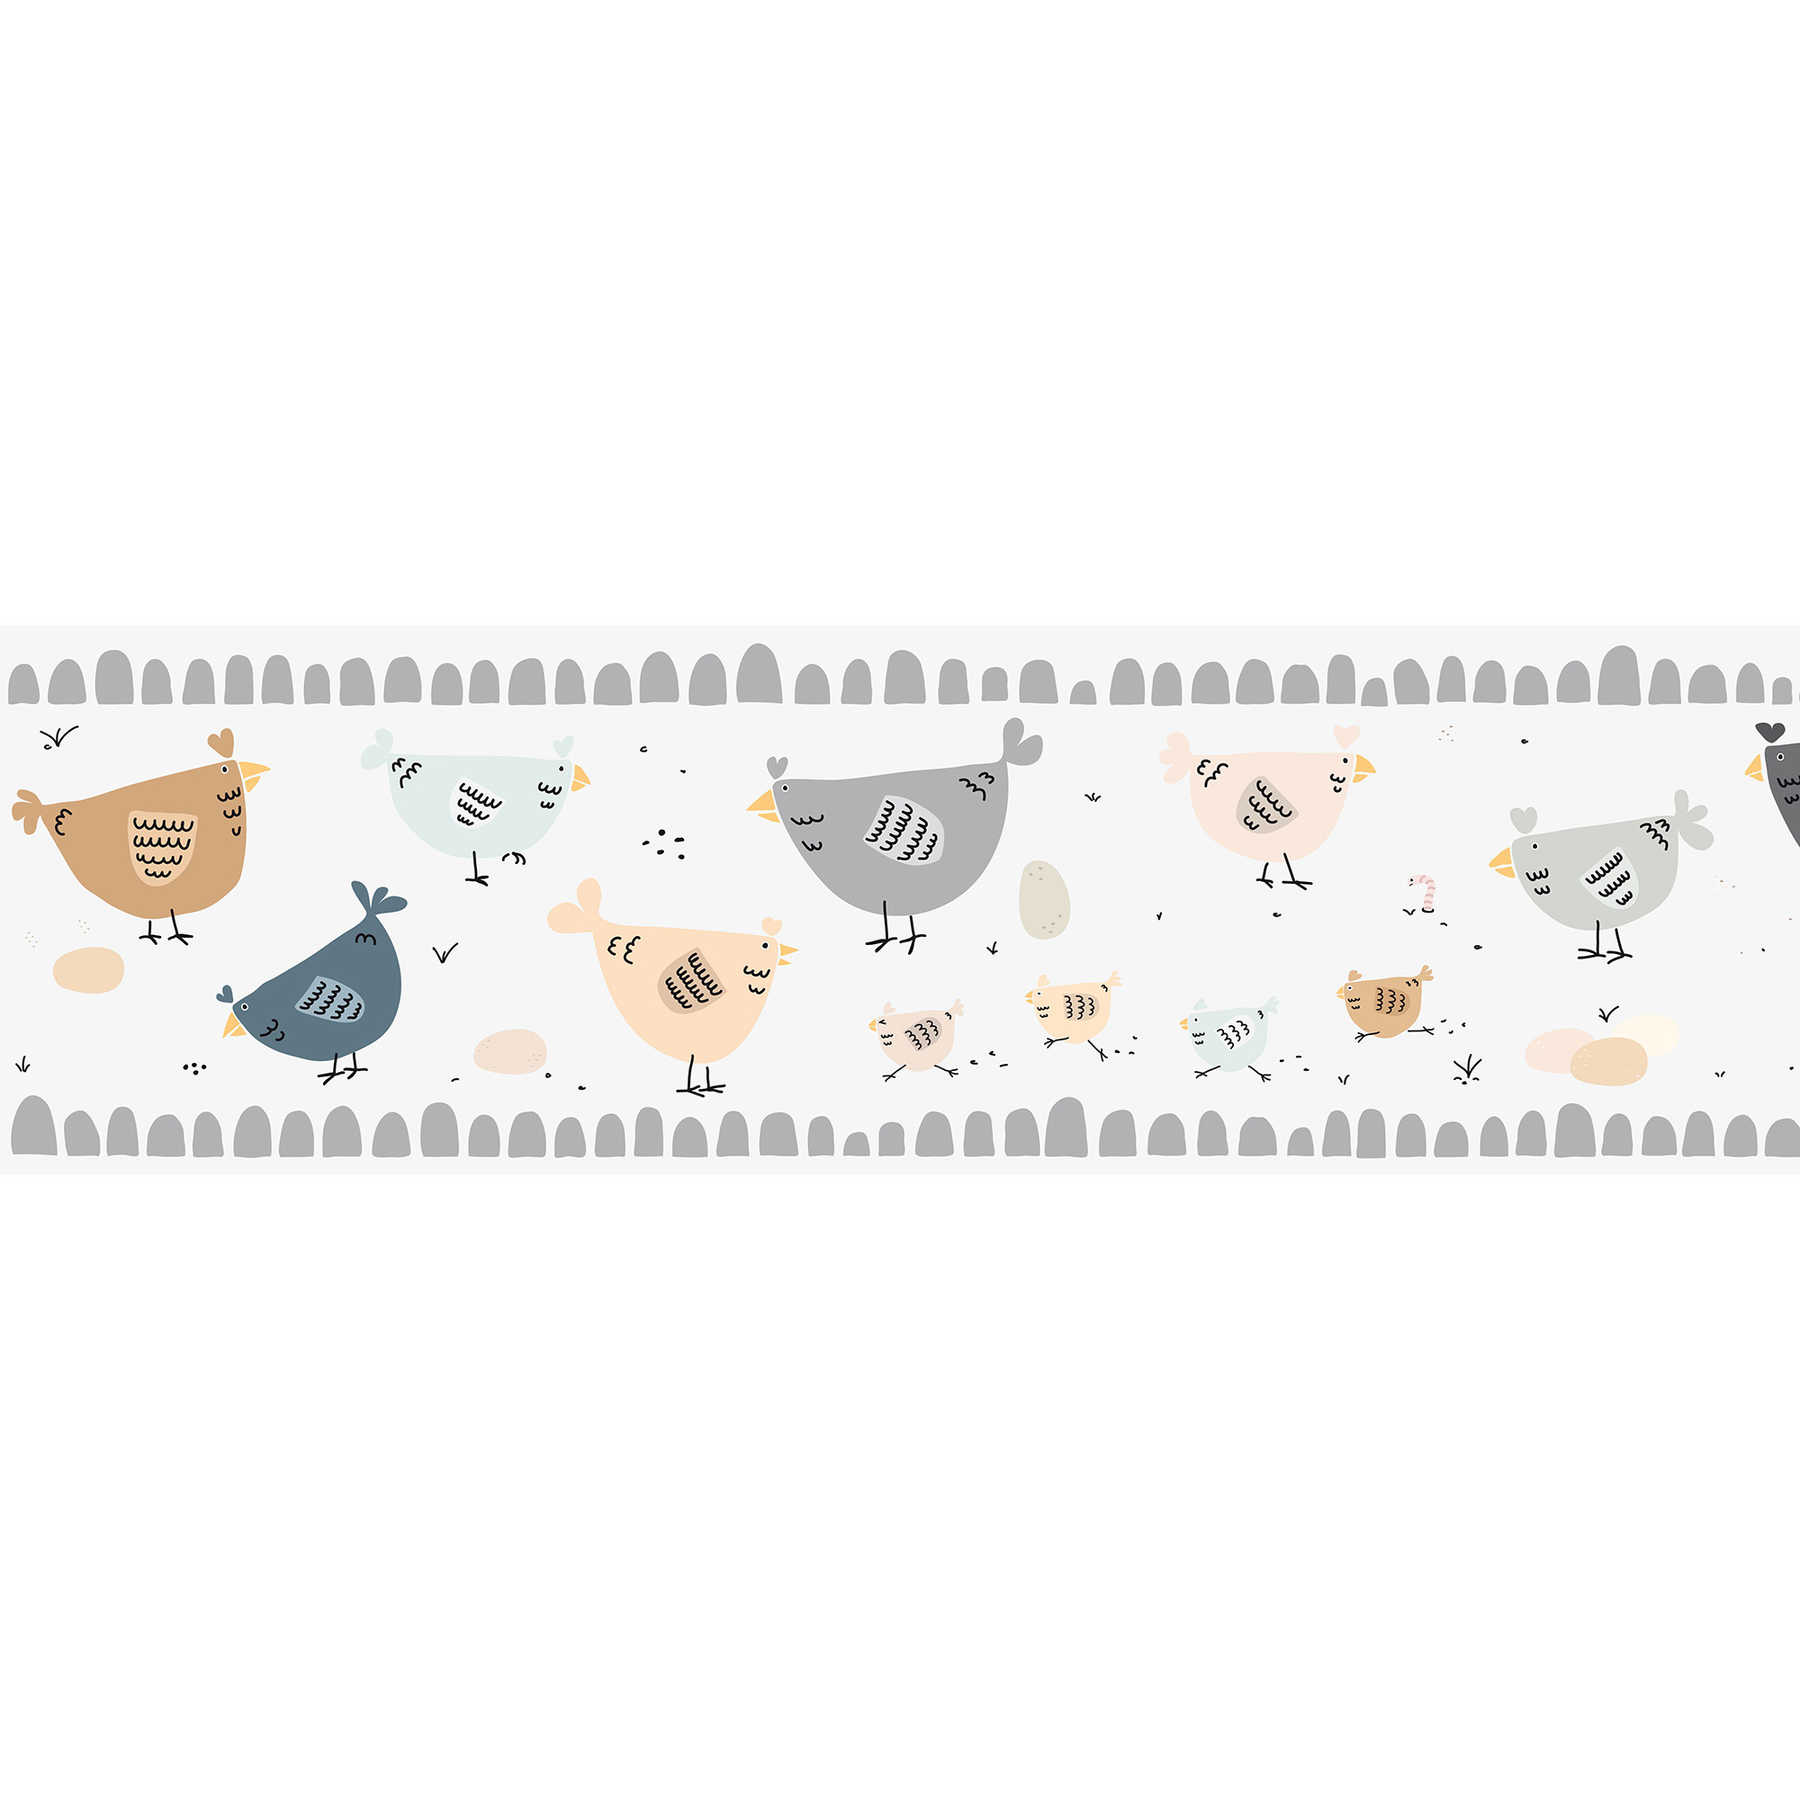 Funny border "Chicken coop" for children - self-adhesive - grey, brown, orange
